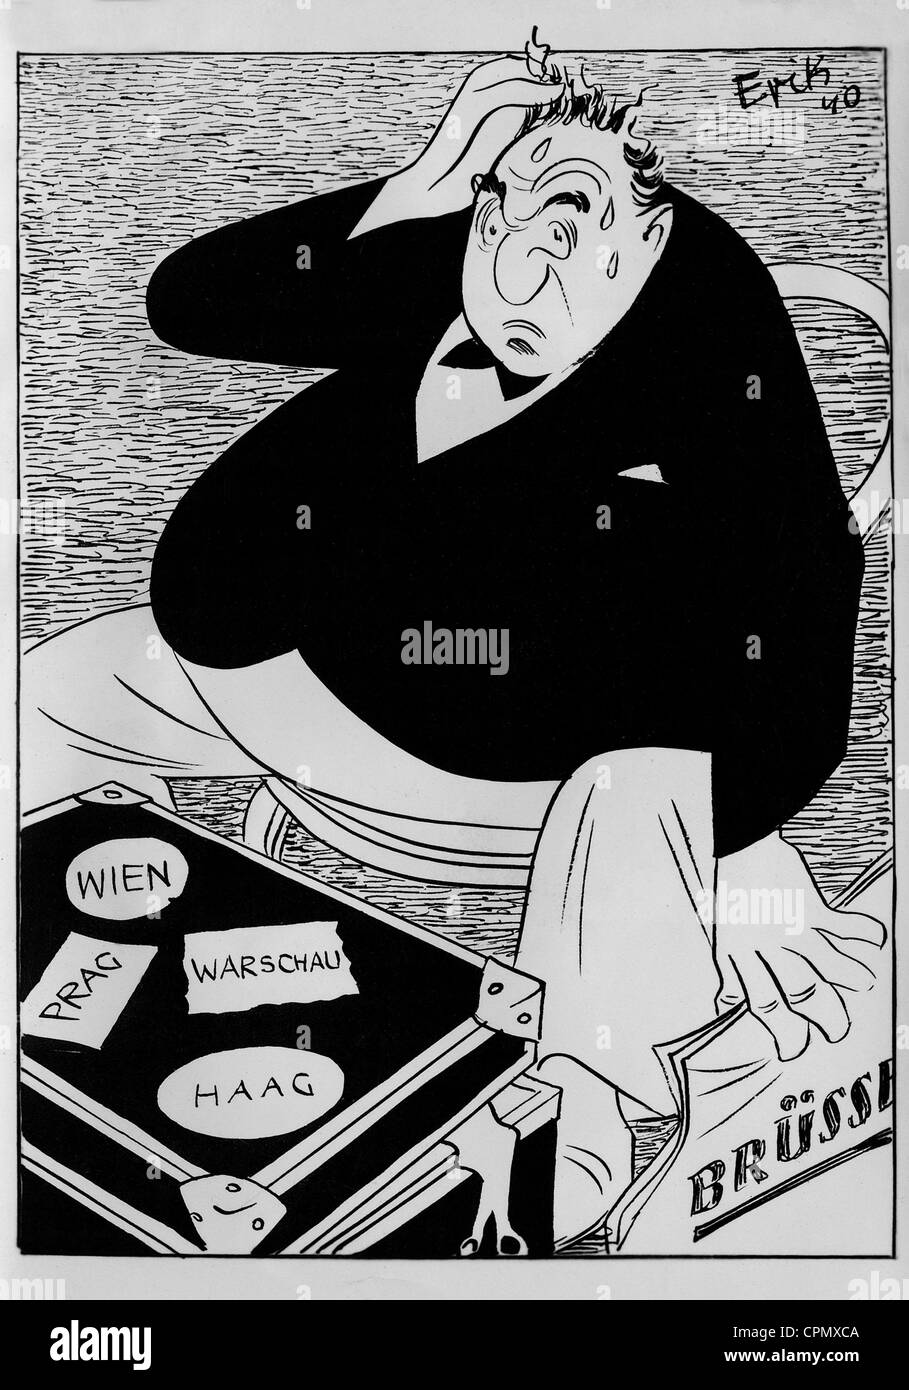 Anti-Semitic caricature, 1940 Stock Photo